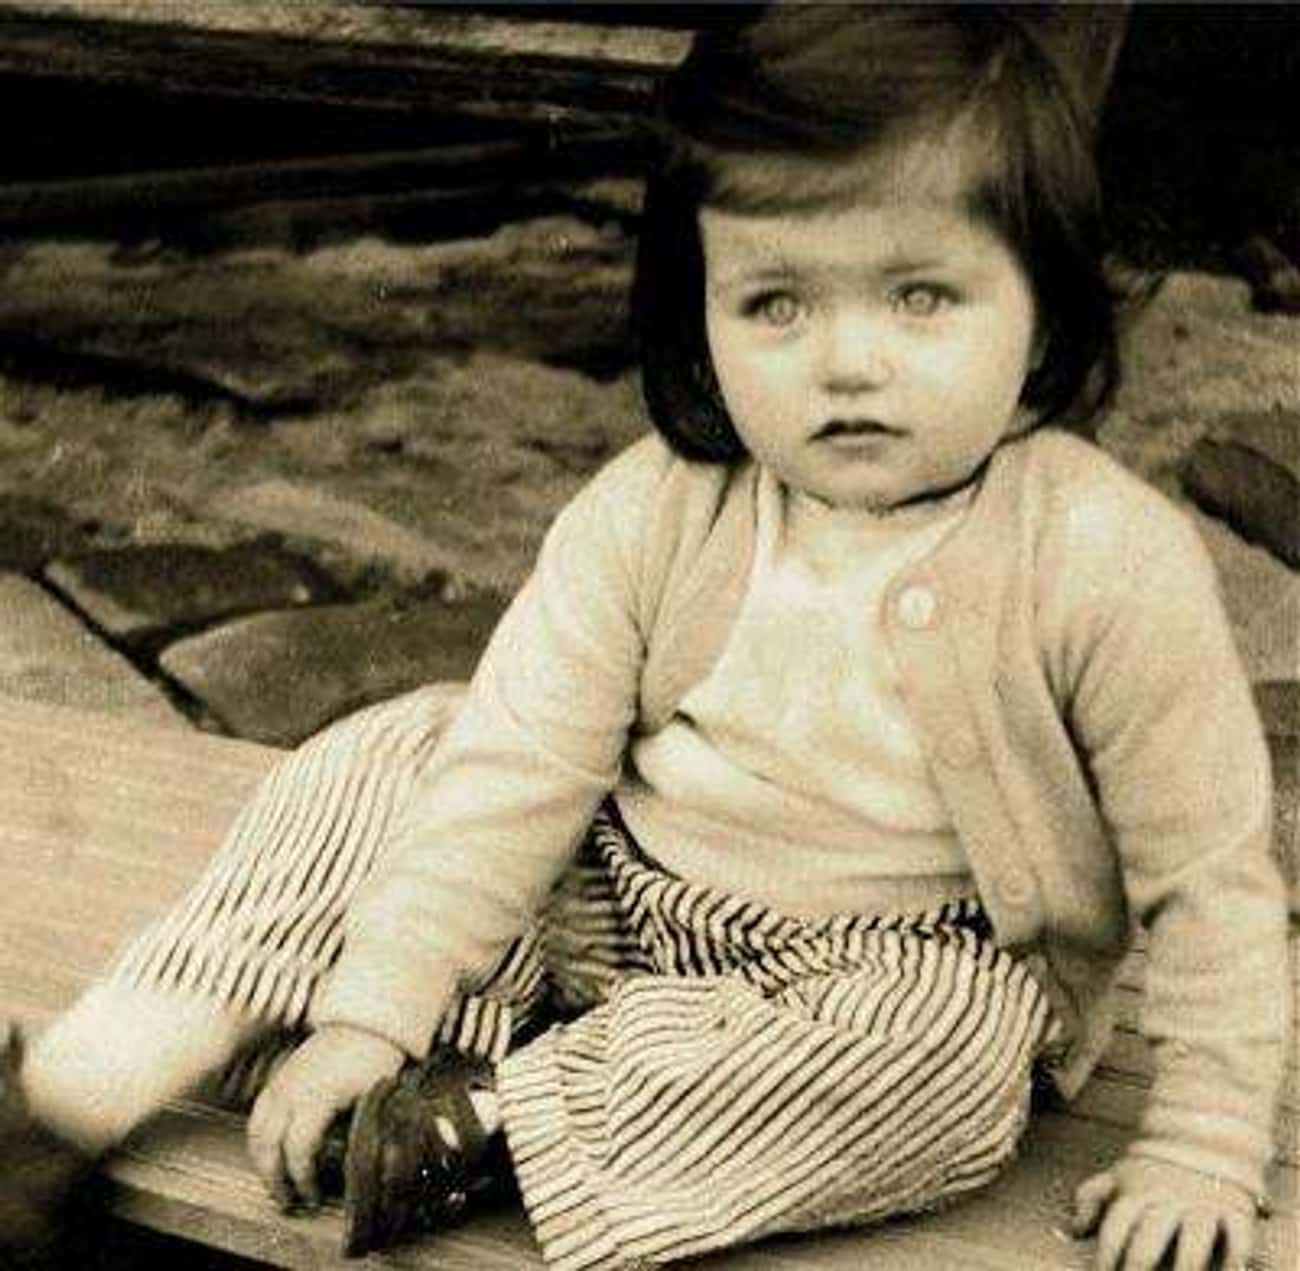 Young Catherine Zeta-Jones as a Baby